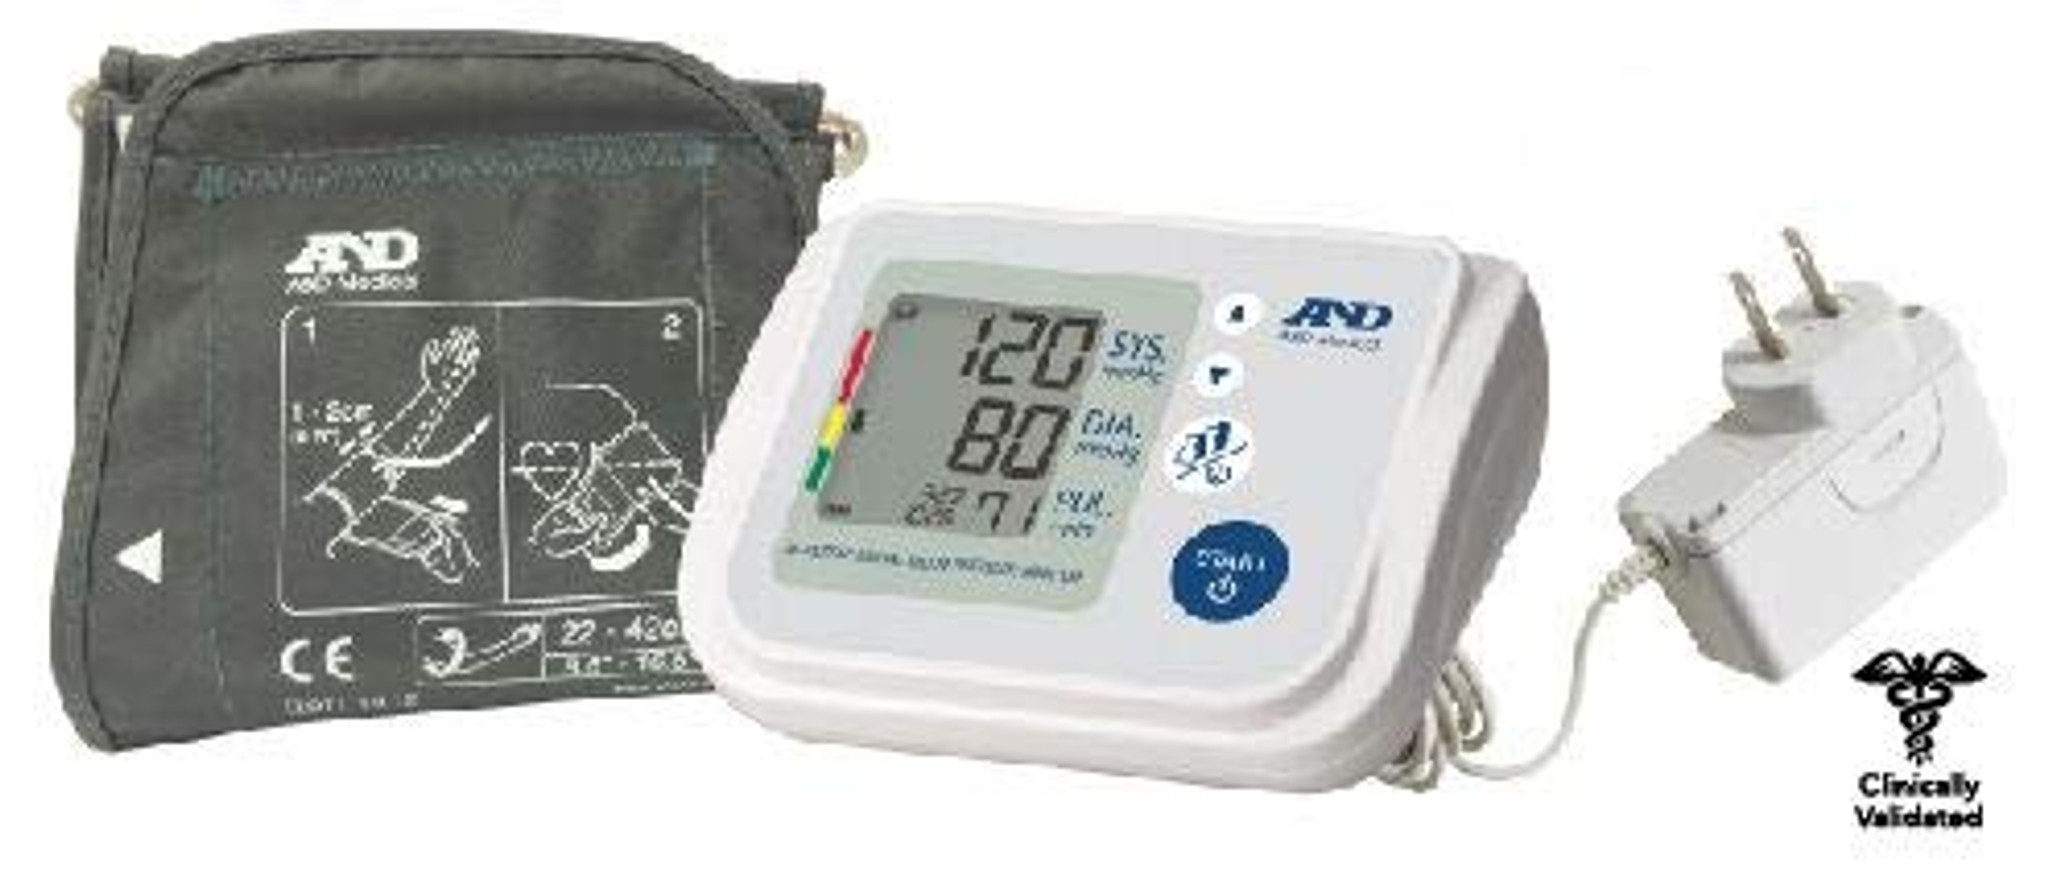 A&D Medical UA-611 Basic Blood Pressure Monitor